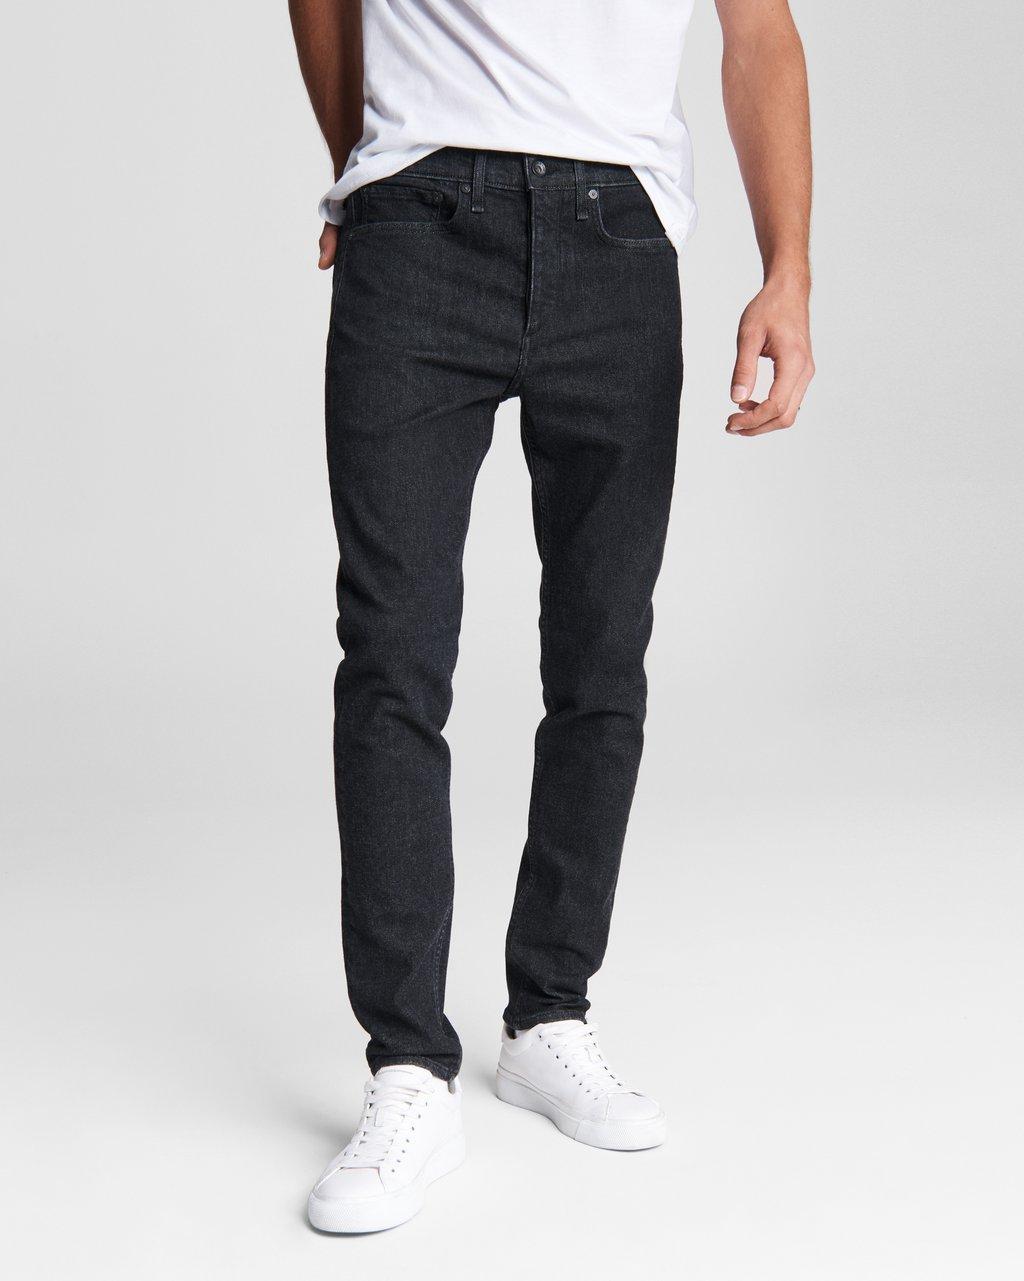 Fit 2 - Black Cashmere | Men Jeans | rag & bone